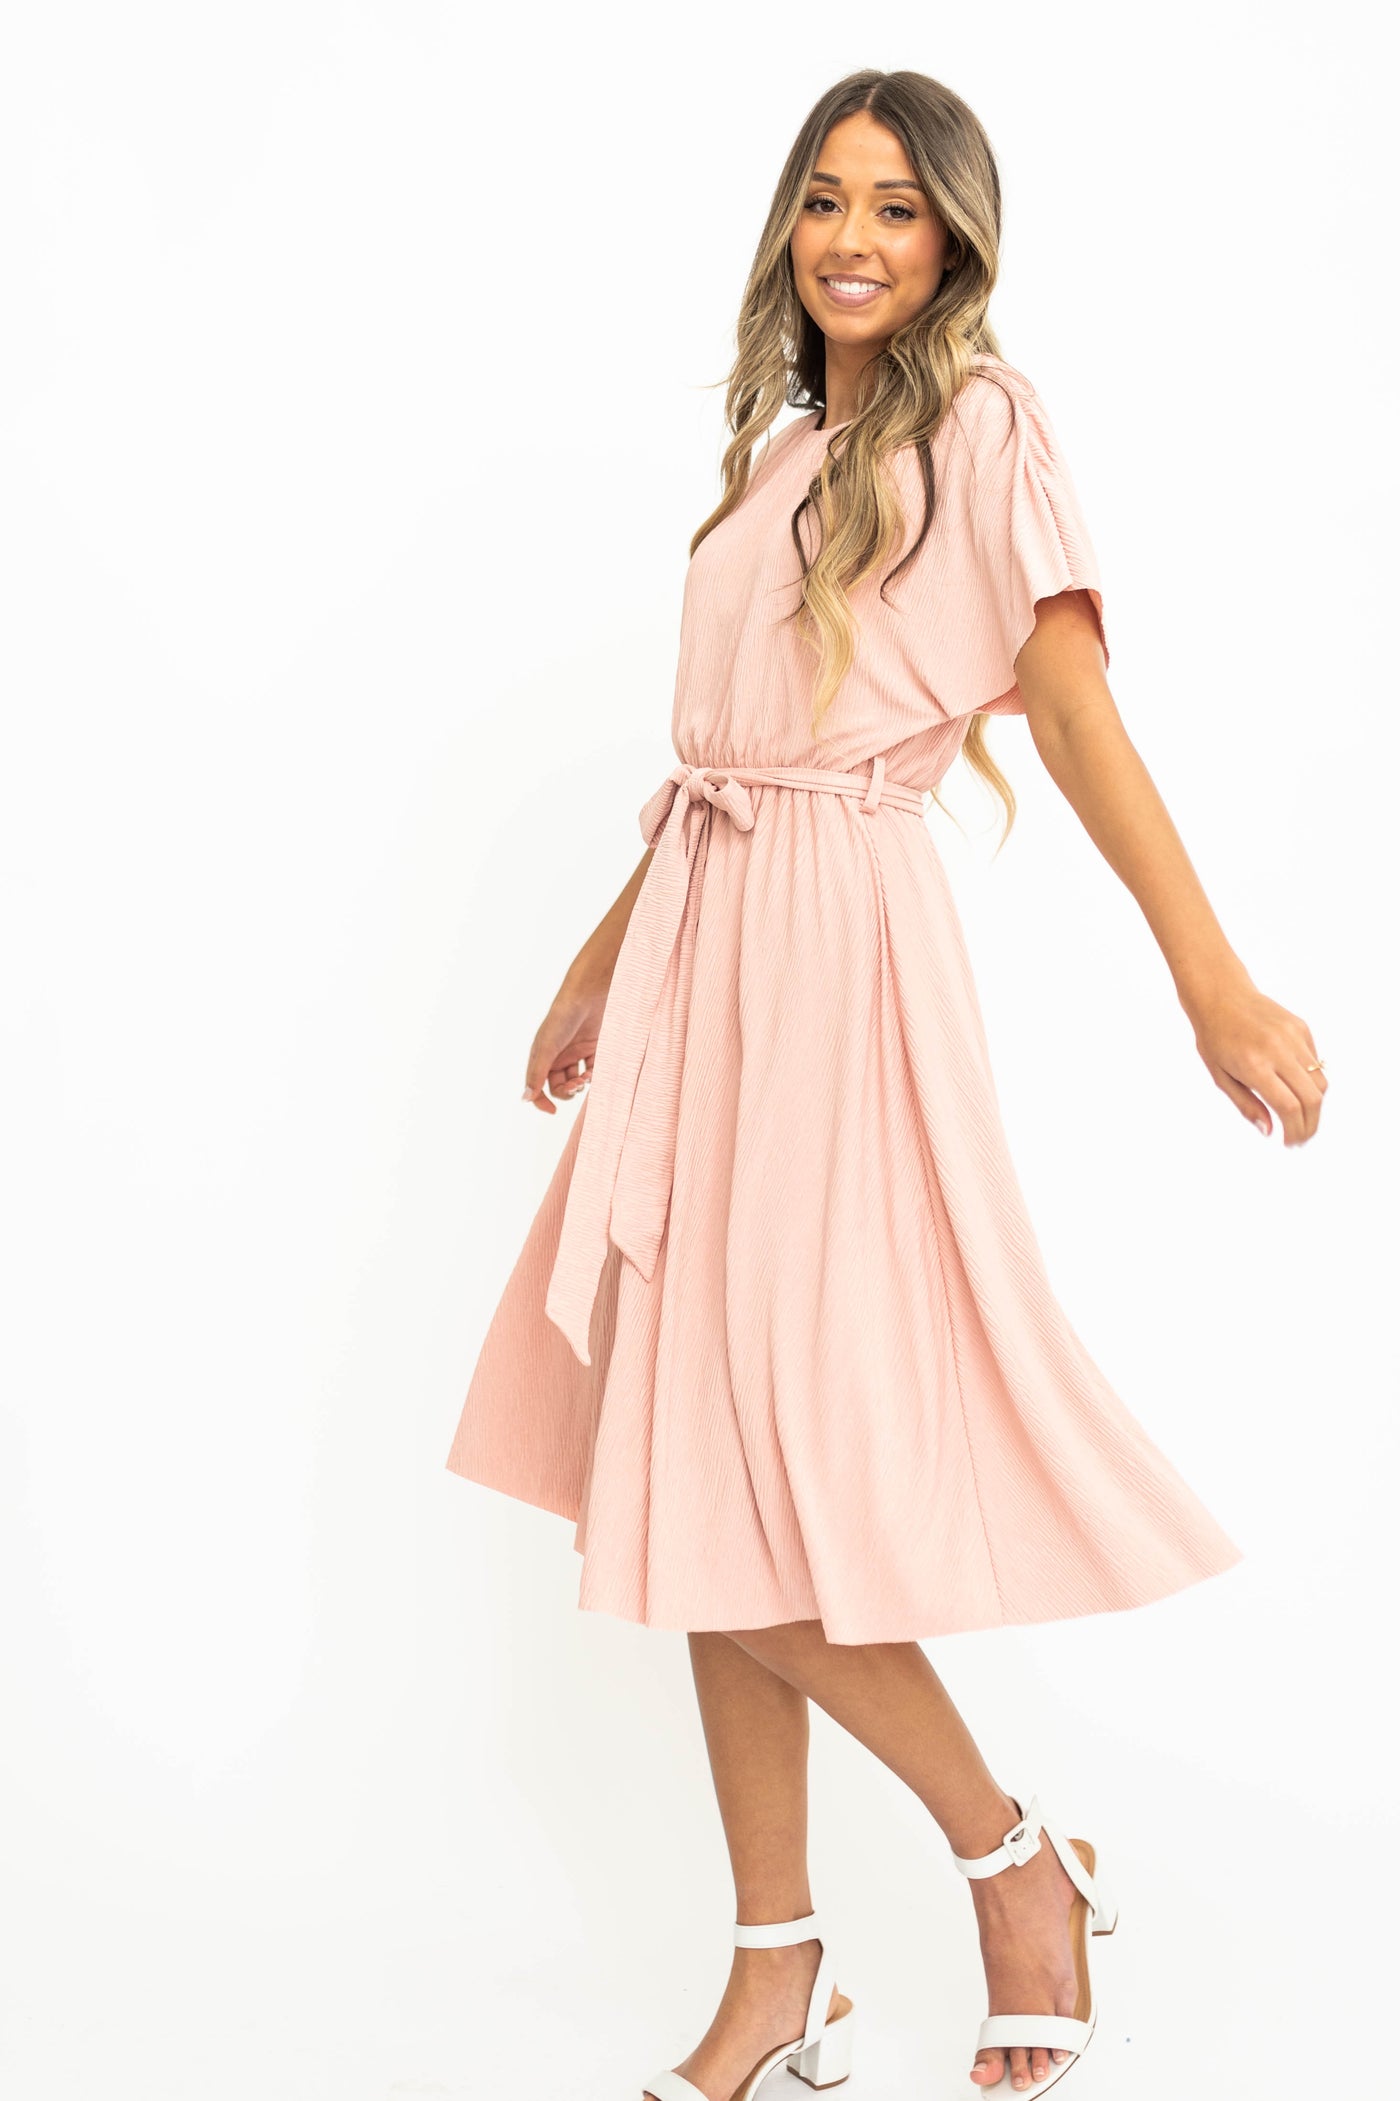 Short sleeve knee length pink dress